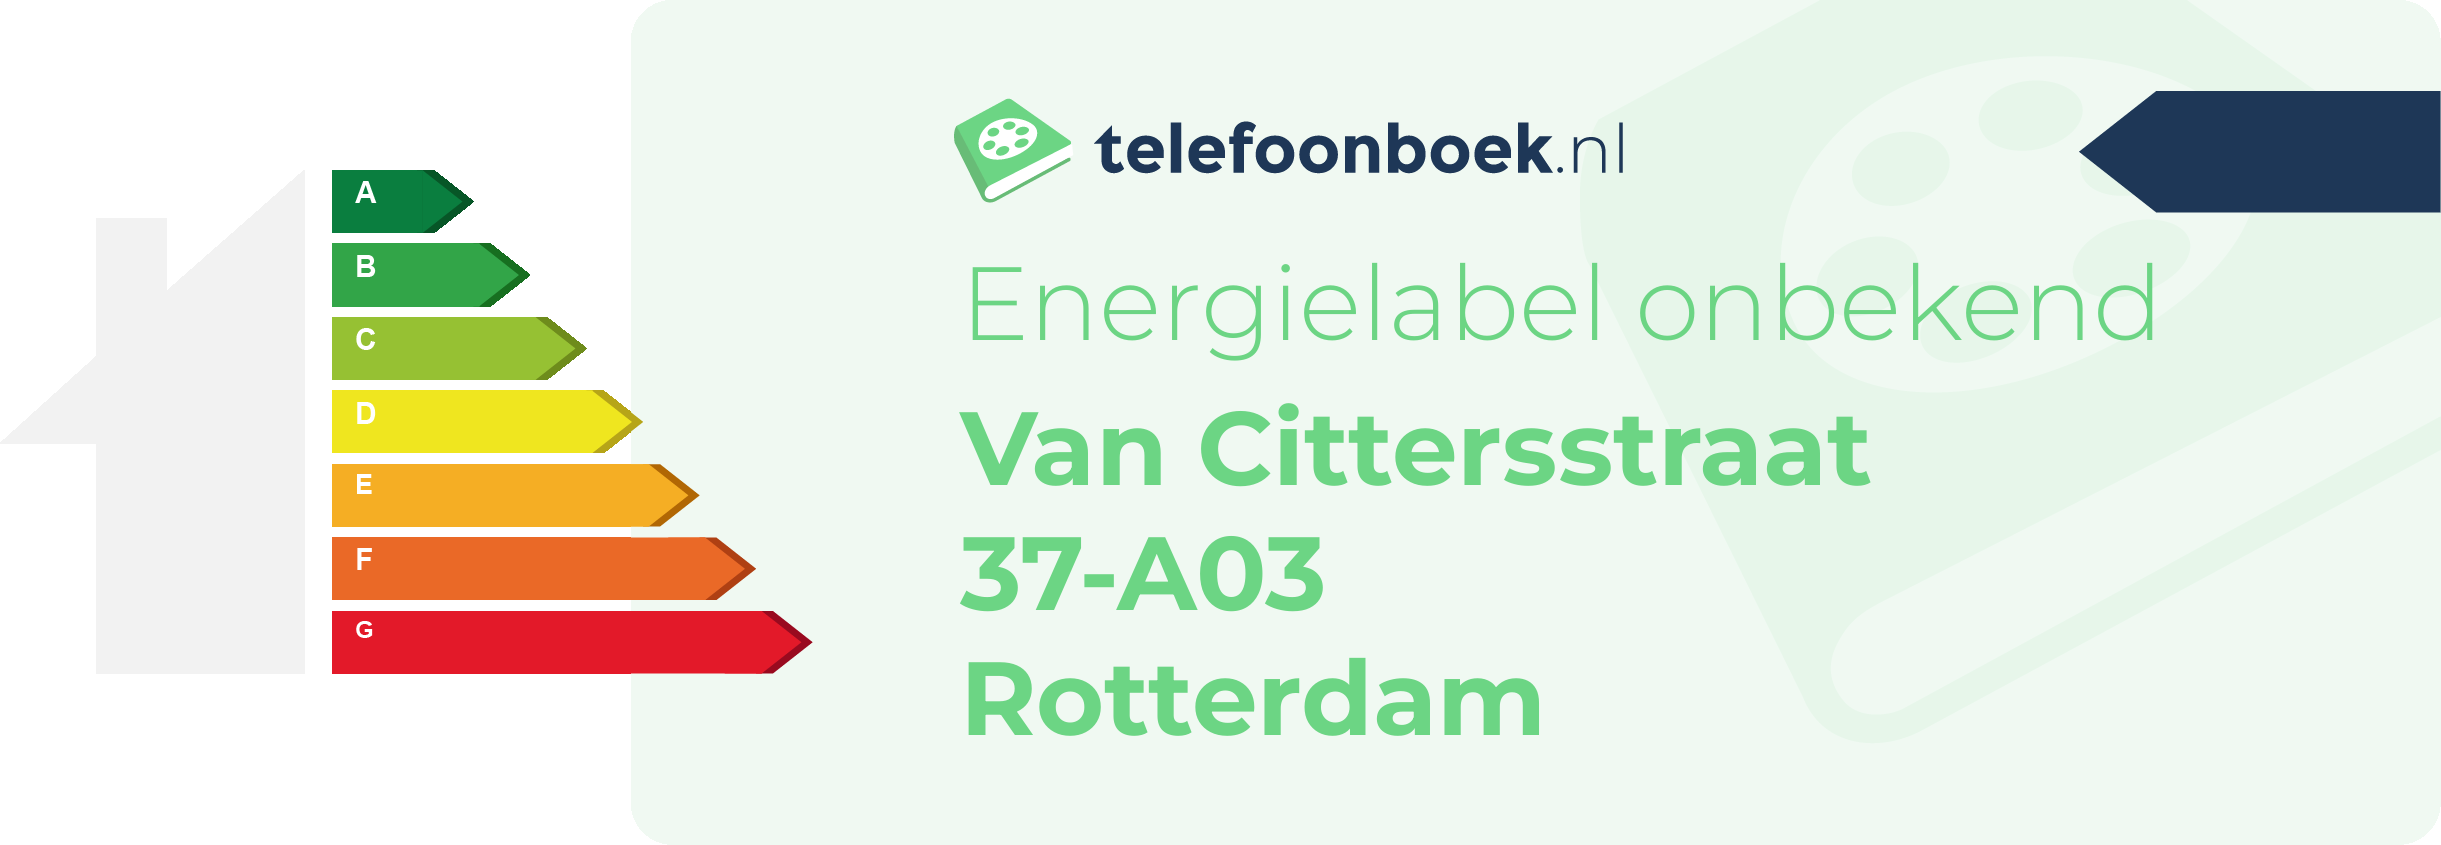 Energielabel Van Cittersstraat 37-A03 Rotterdam